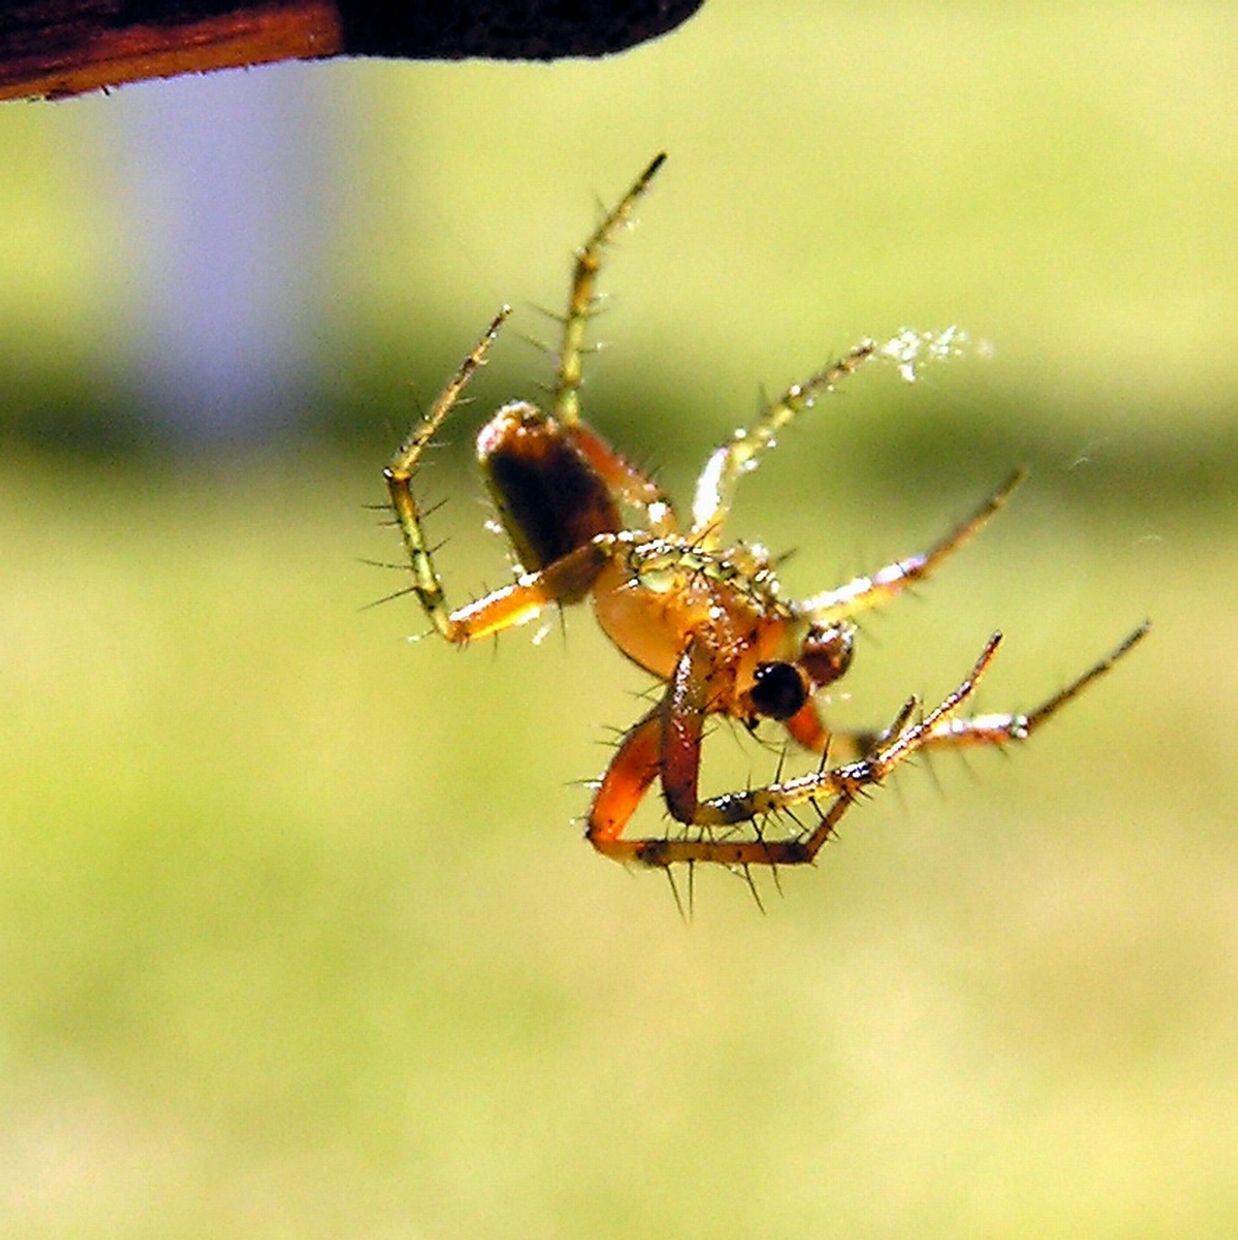 Arachnophobia: Fear of spiders